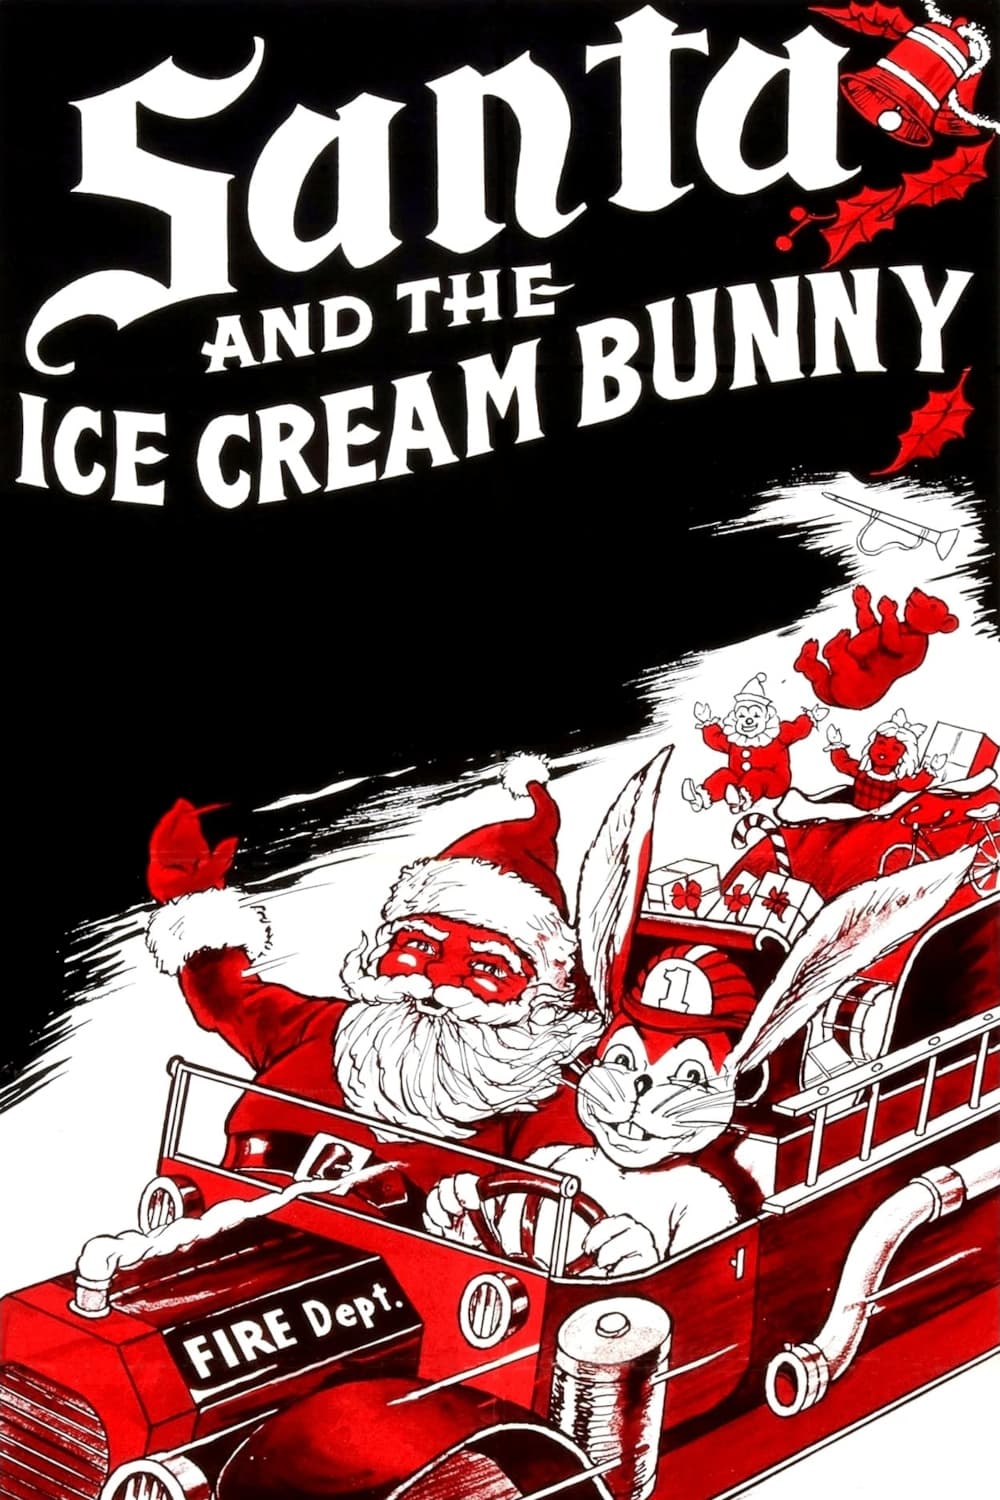 Santa and the Ice Cream Bunny